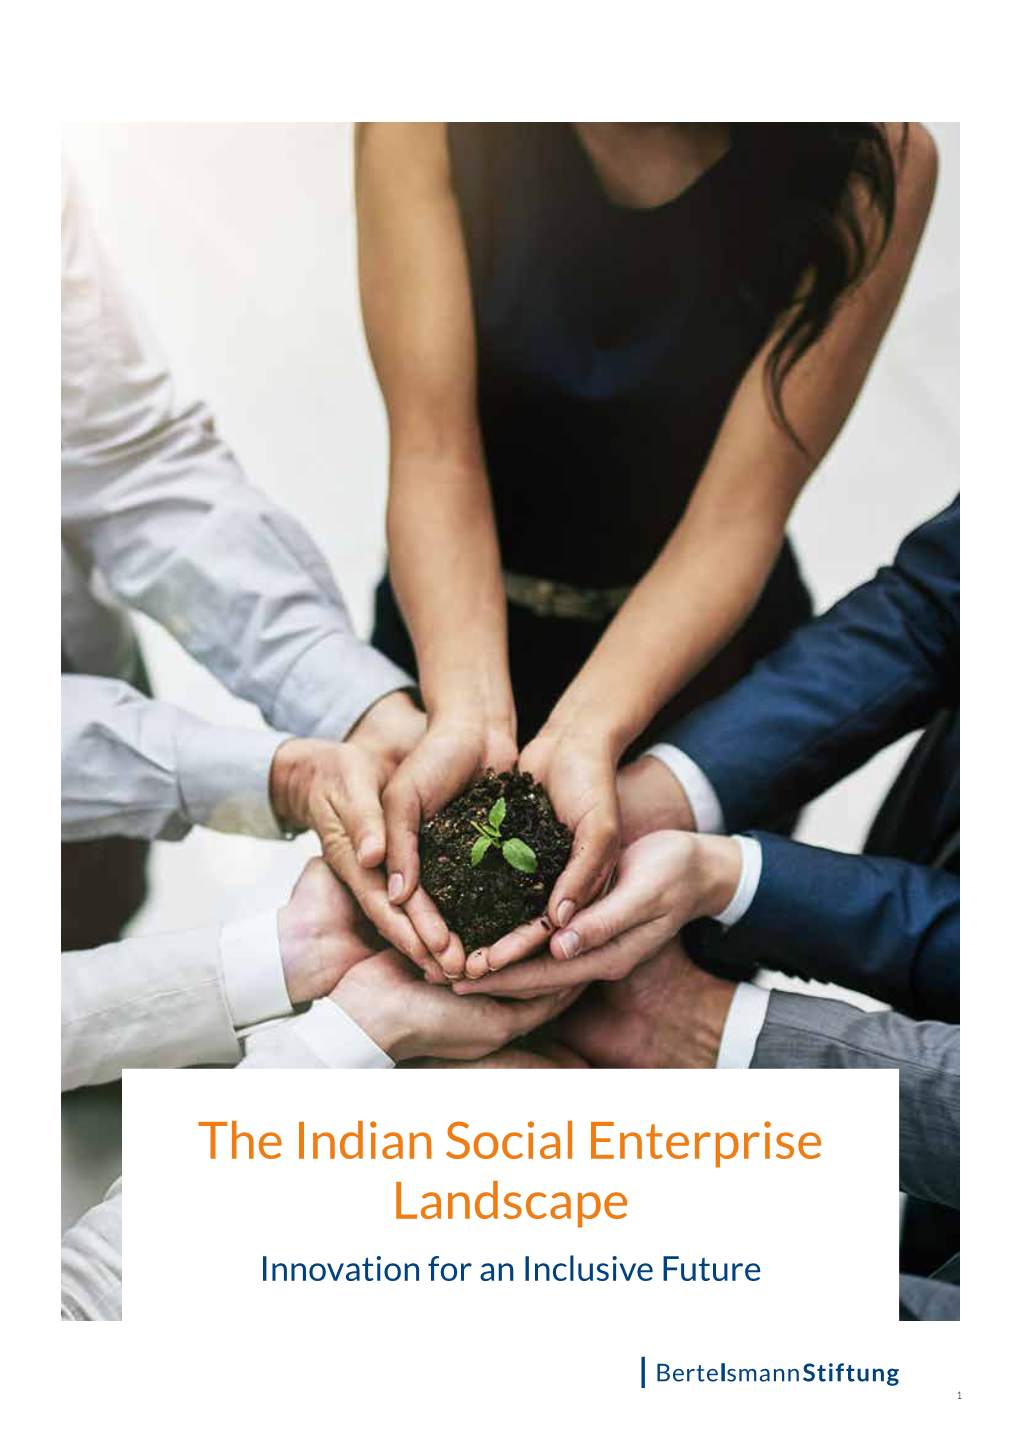 The Indian Social Enterprise Landscape Innovation for an Inclusive Future